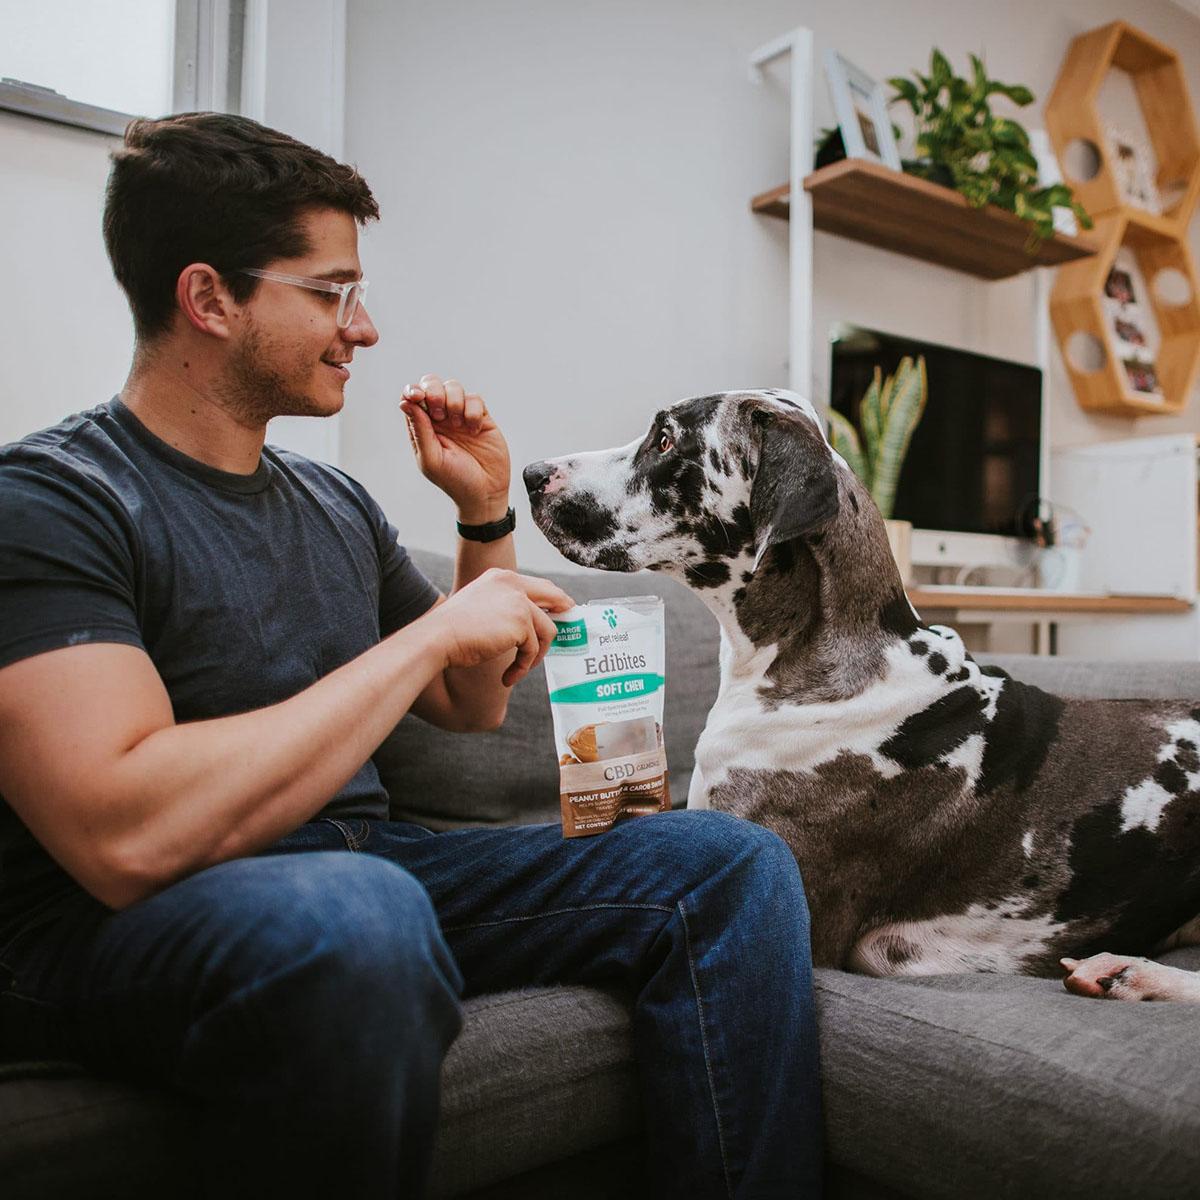 Pet Releaf Hemp Oil Edibites Dog Treats - Peanut Butter & Carob Swirl for Calming